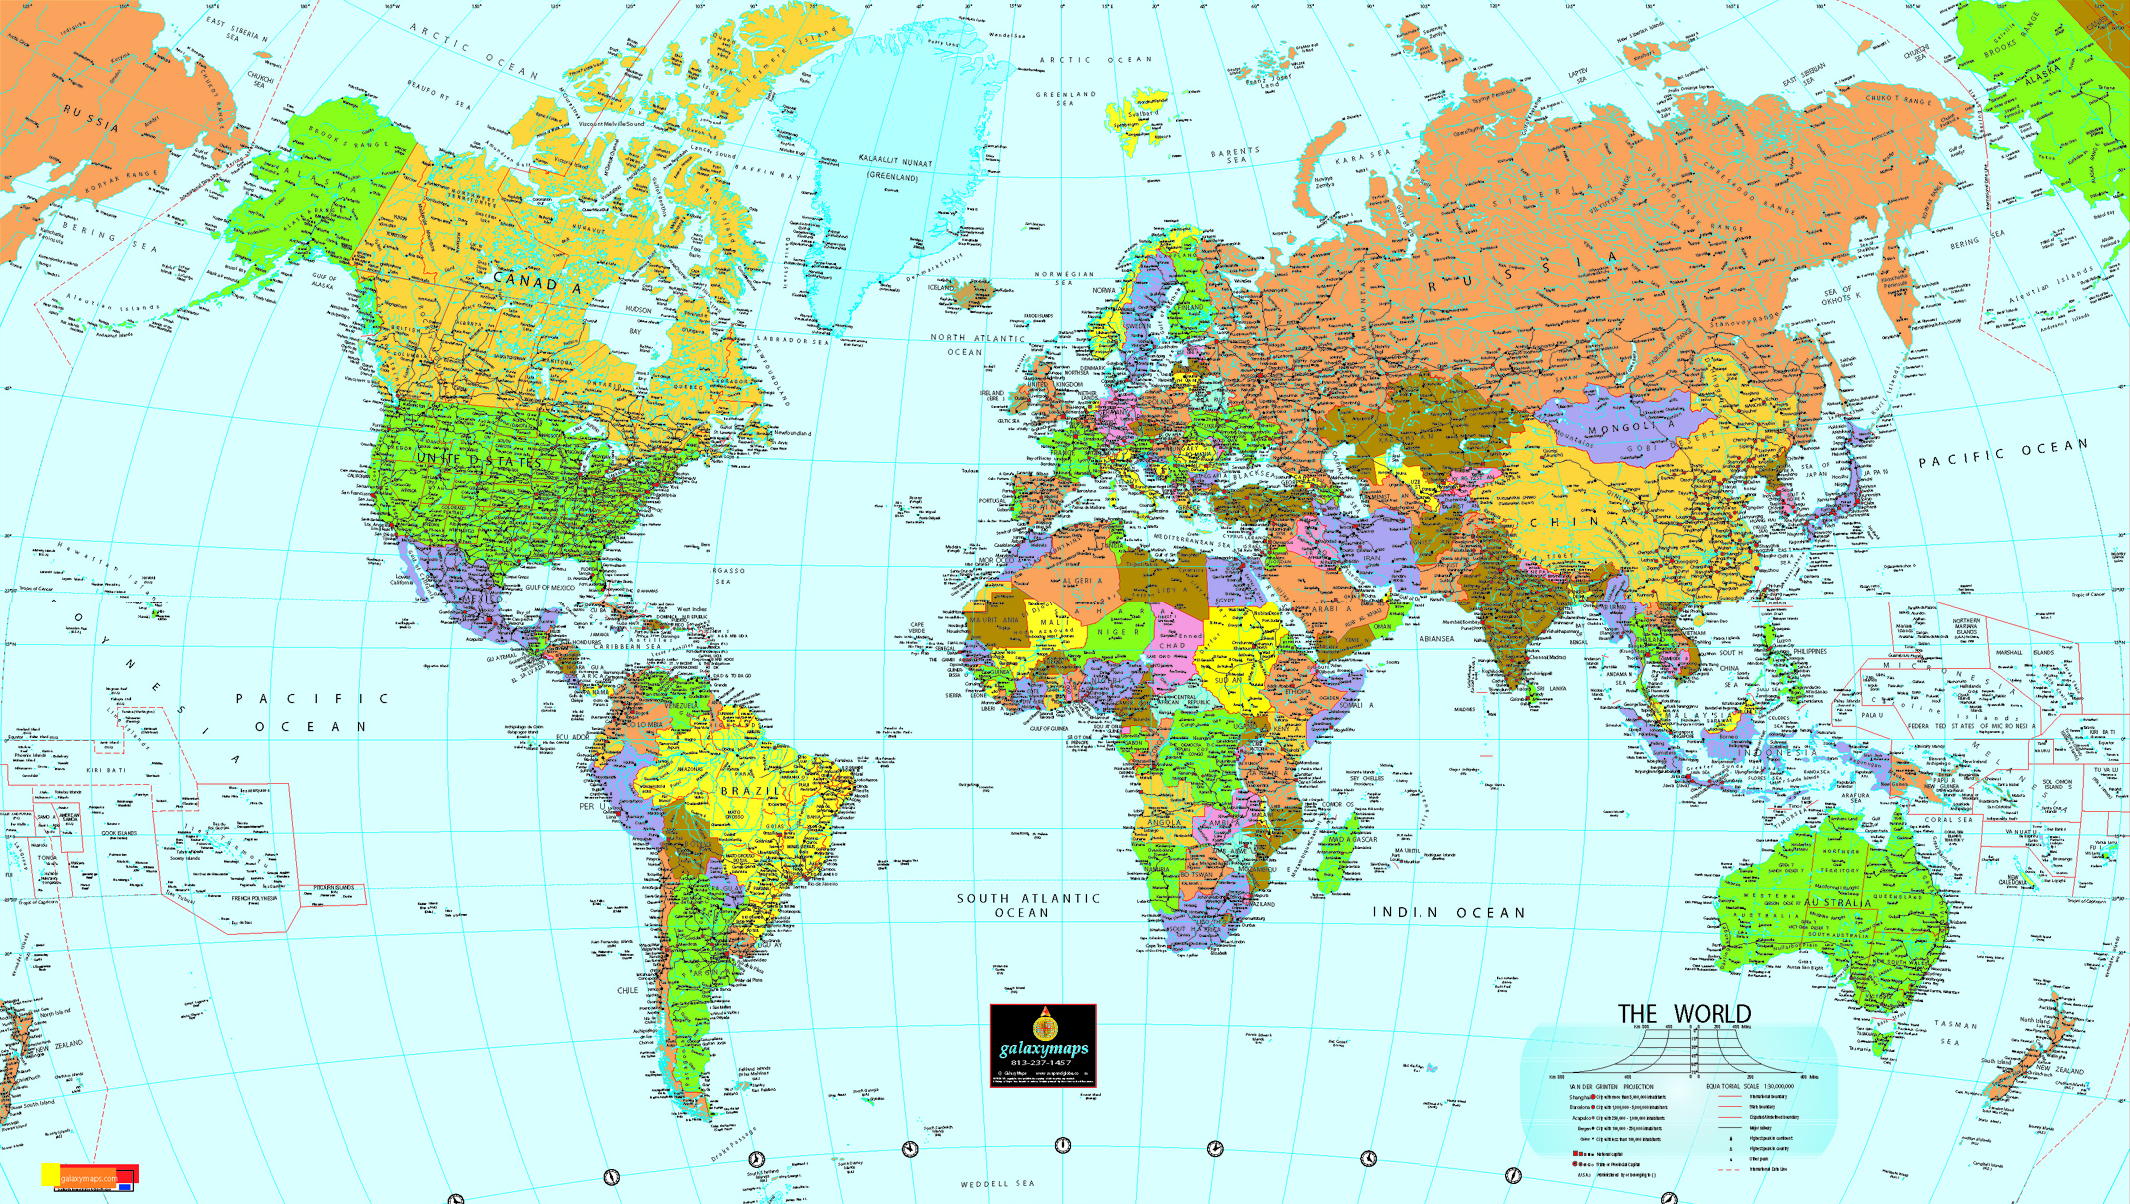 World political map. Source: galaxymaps.com. World - Categories of Maps